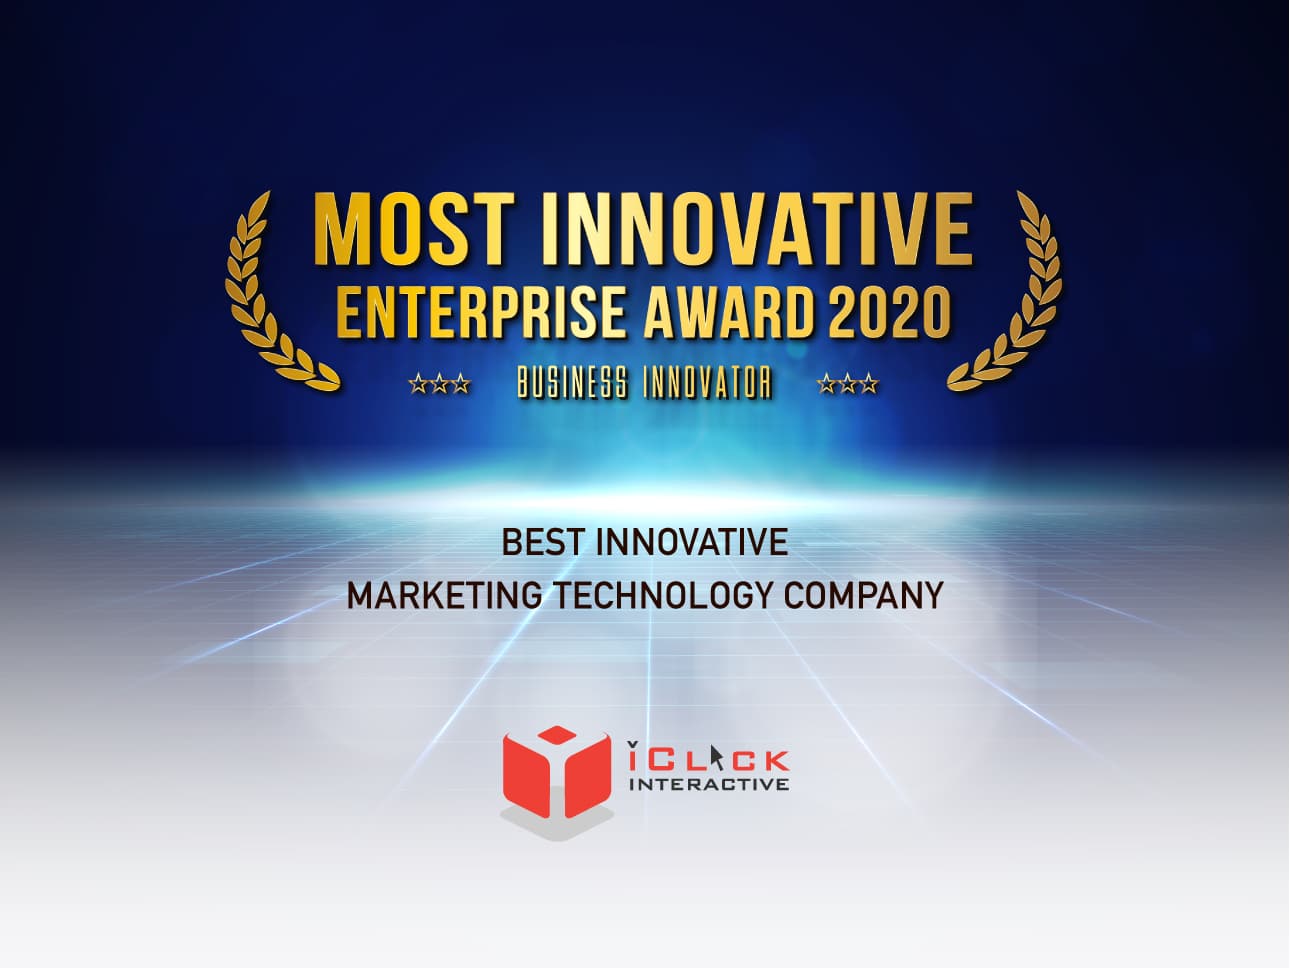 iClick wins “Best Innovative Marketing Technology Company” award at Most Innovative Enterprise Award 2020